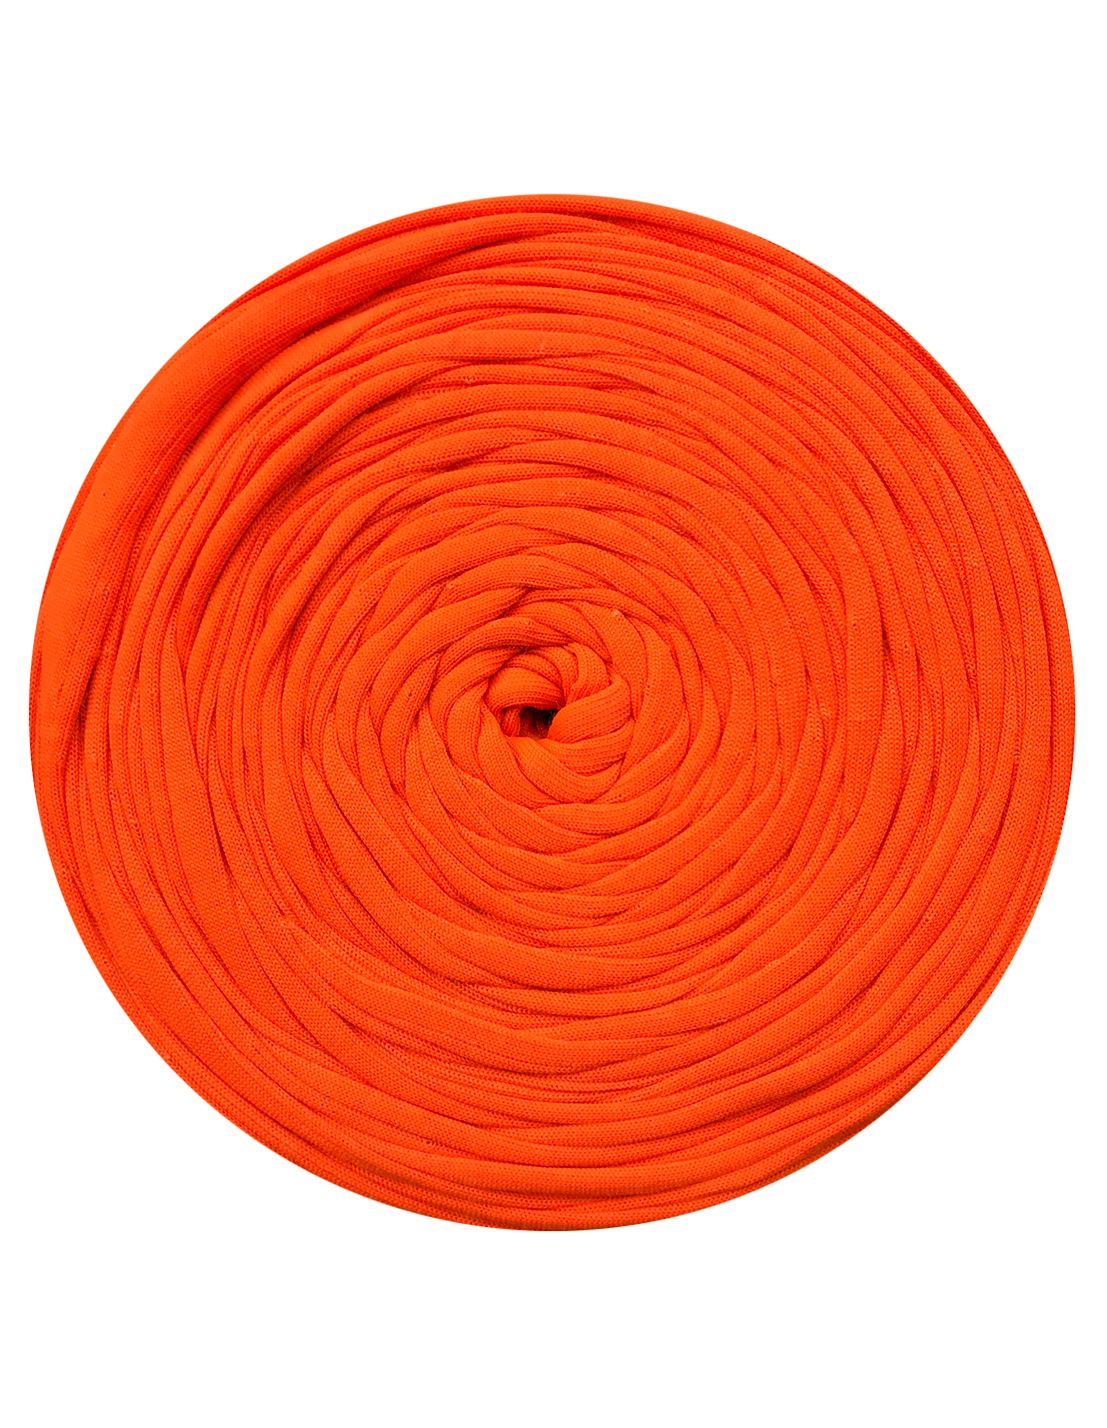 Blood orange t-shirt yarn (100-120m)